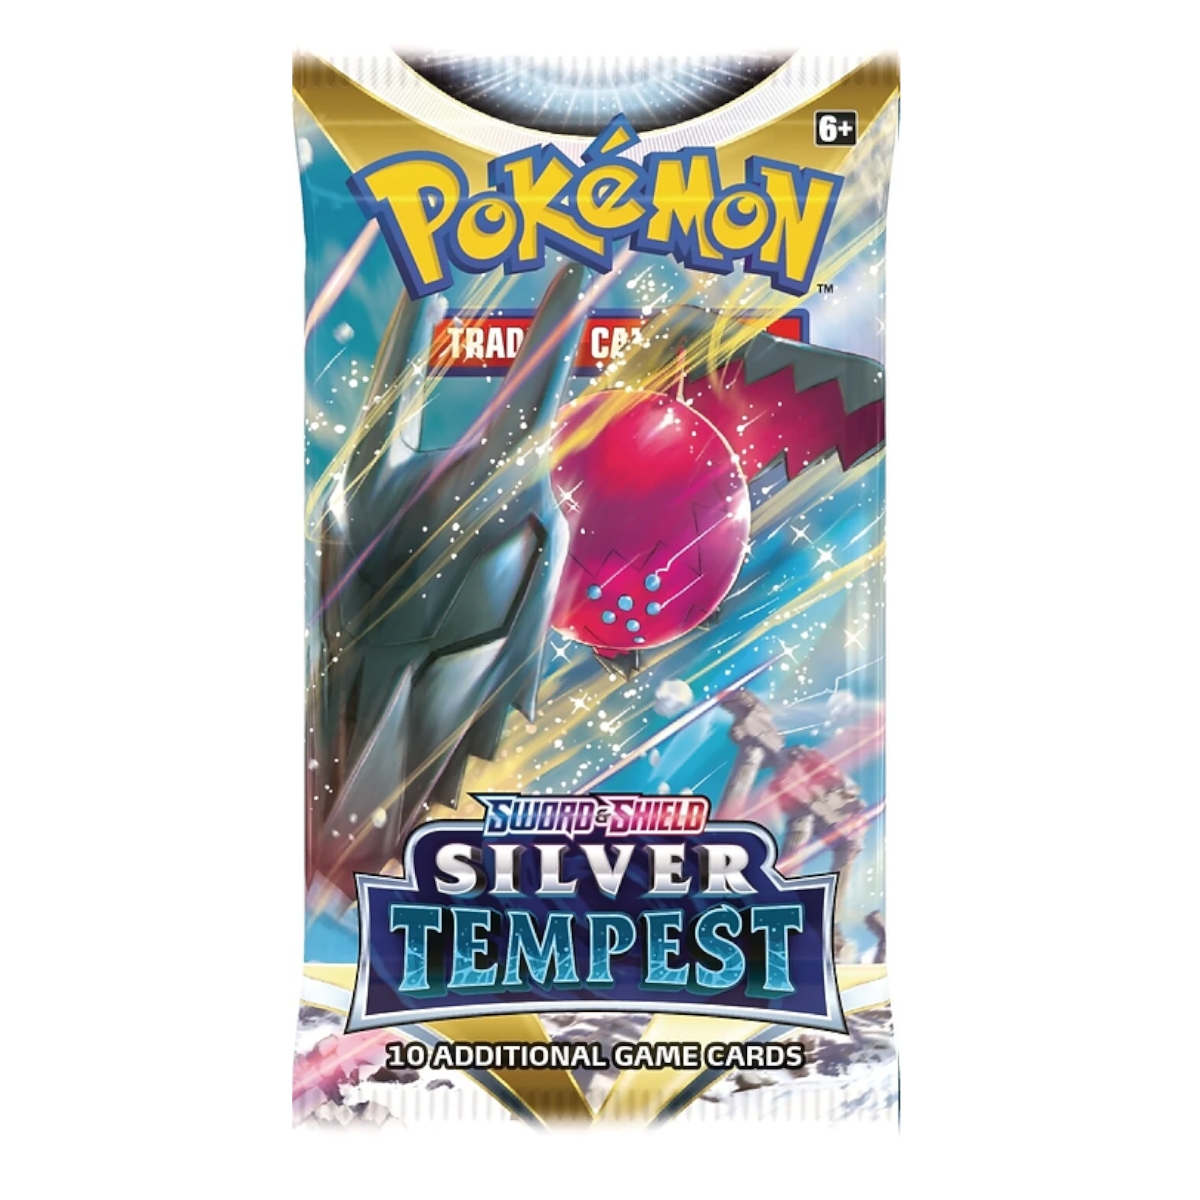 Pokémon - Silver Tempest Booster